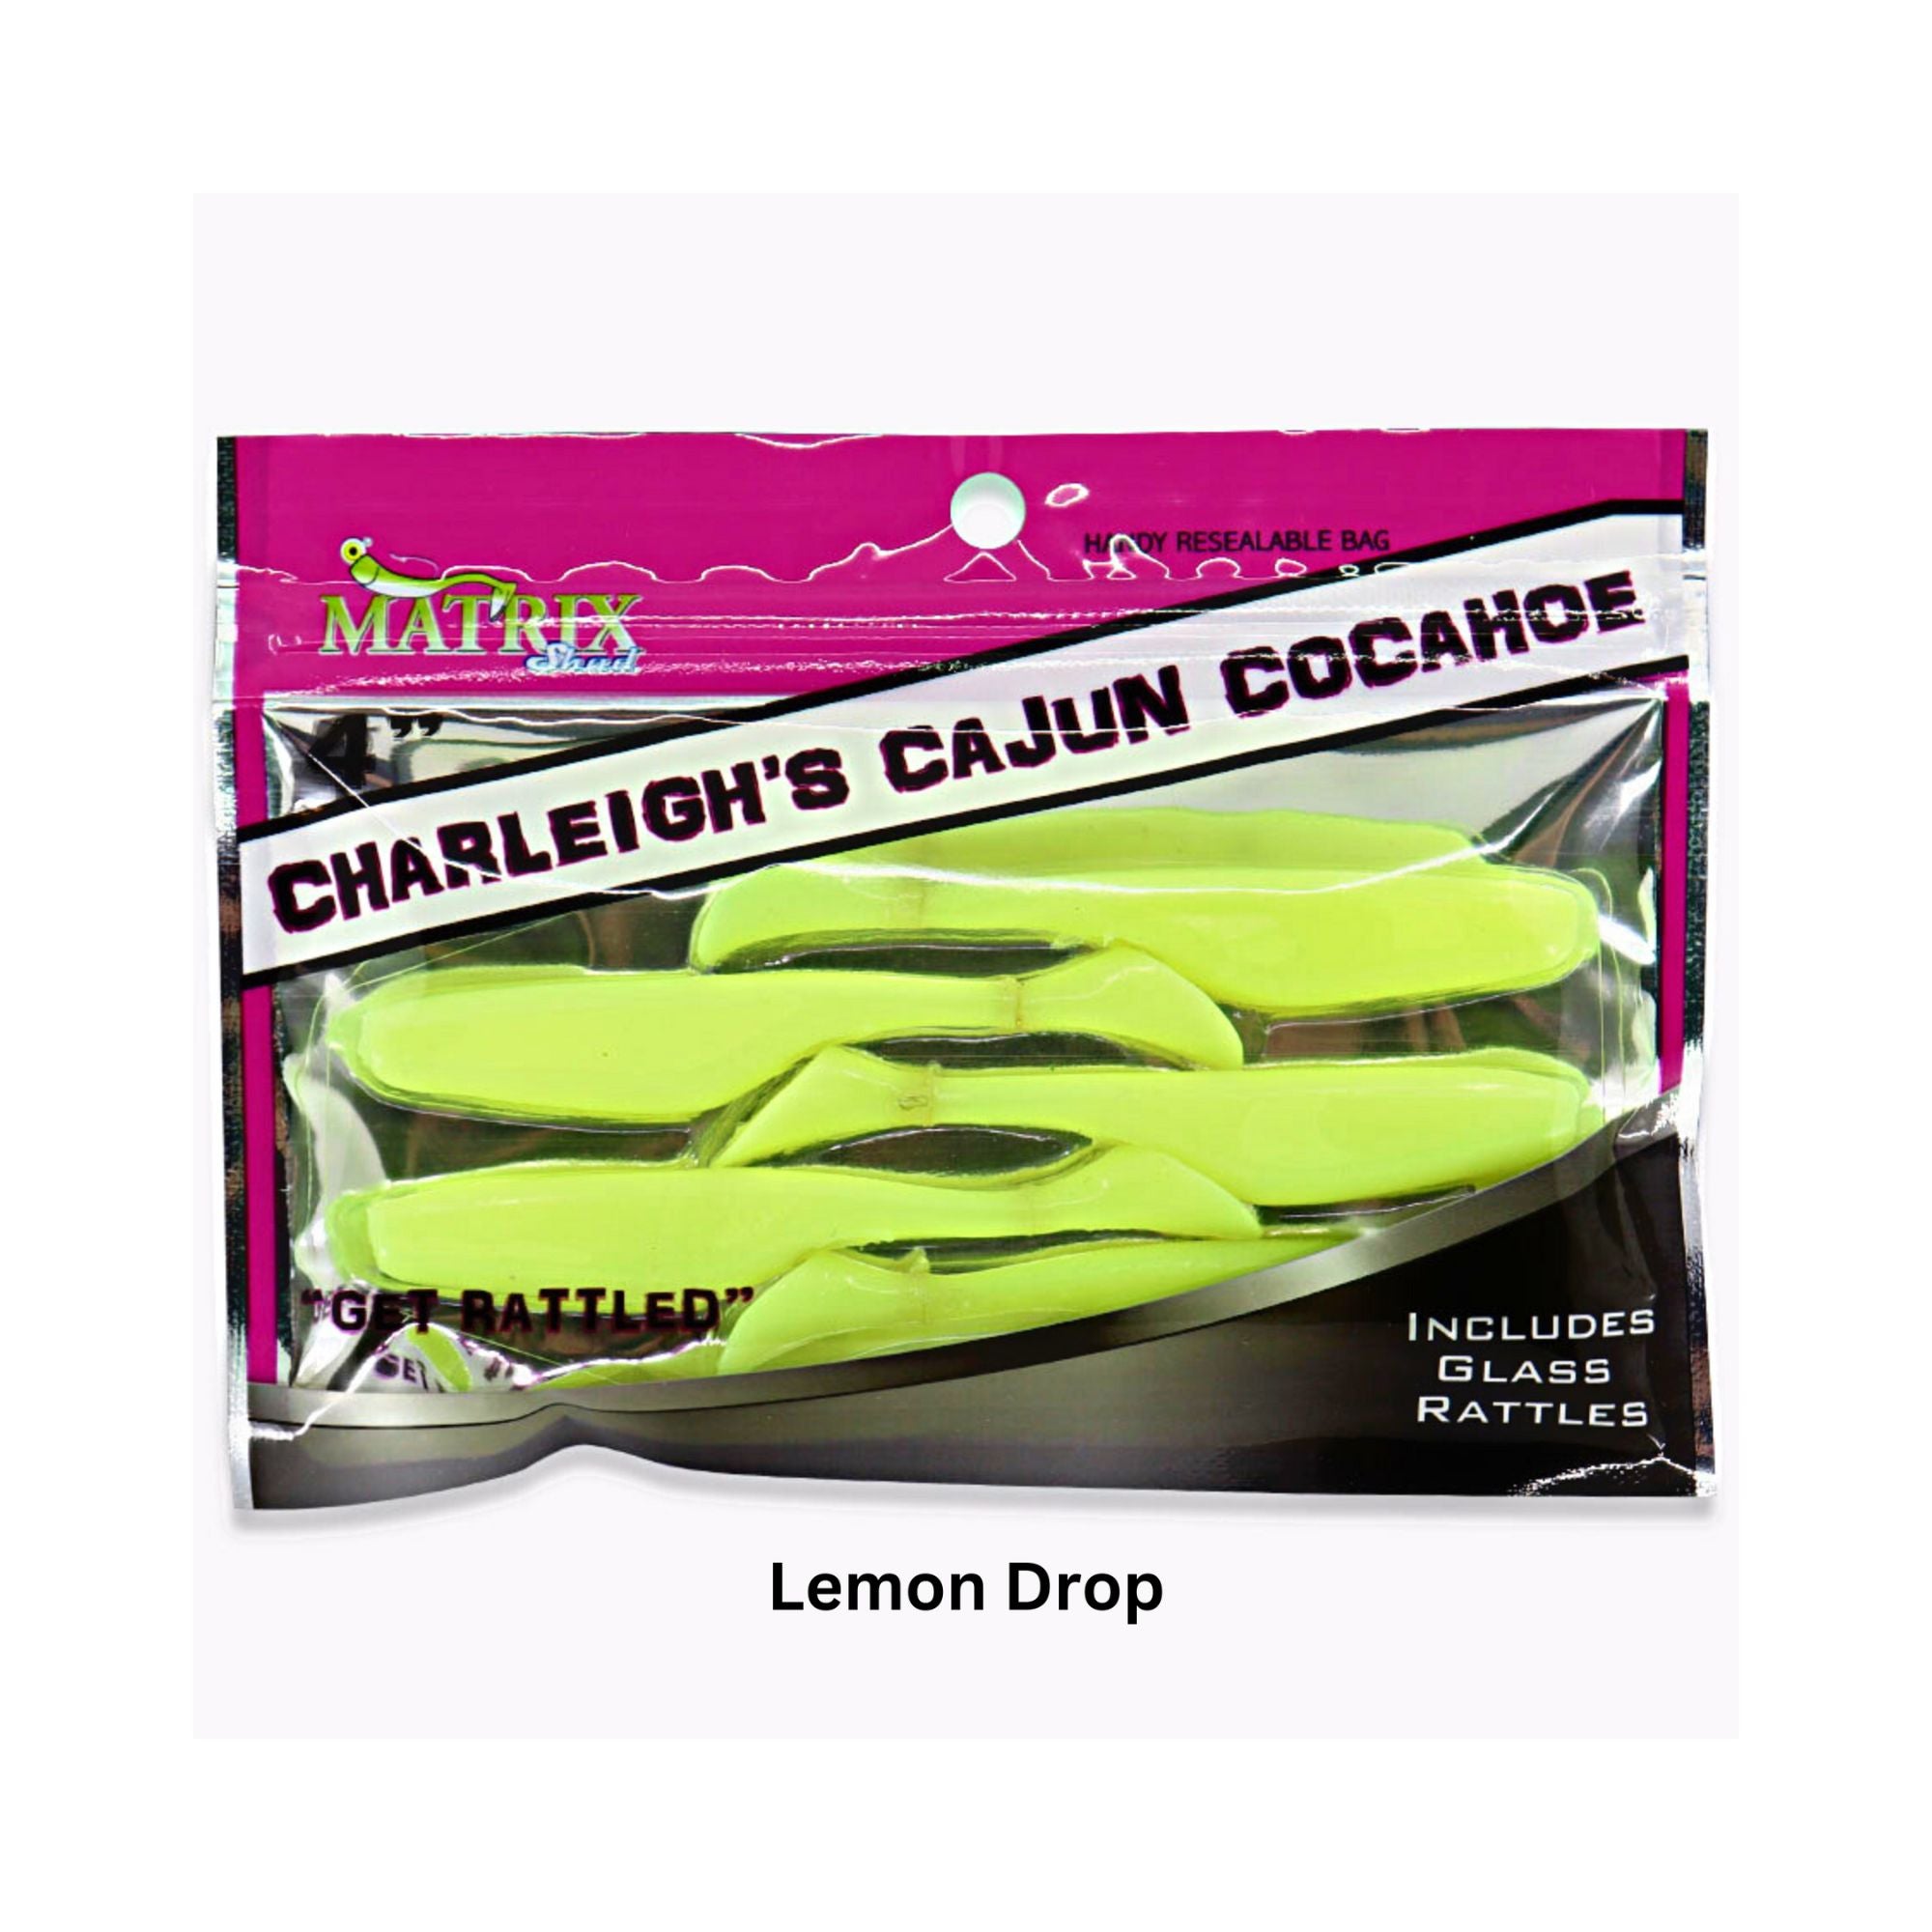 Charleigh's Cajun Cocahoe, Matrix Lures, Baits, Fishing Store